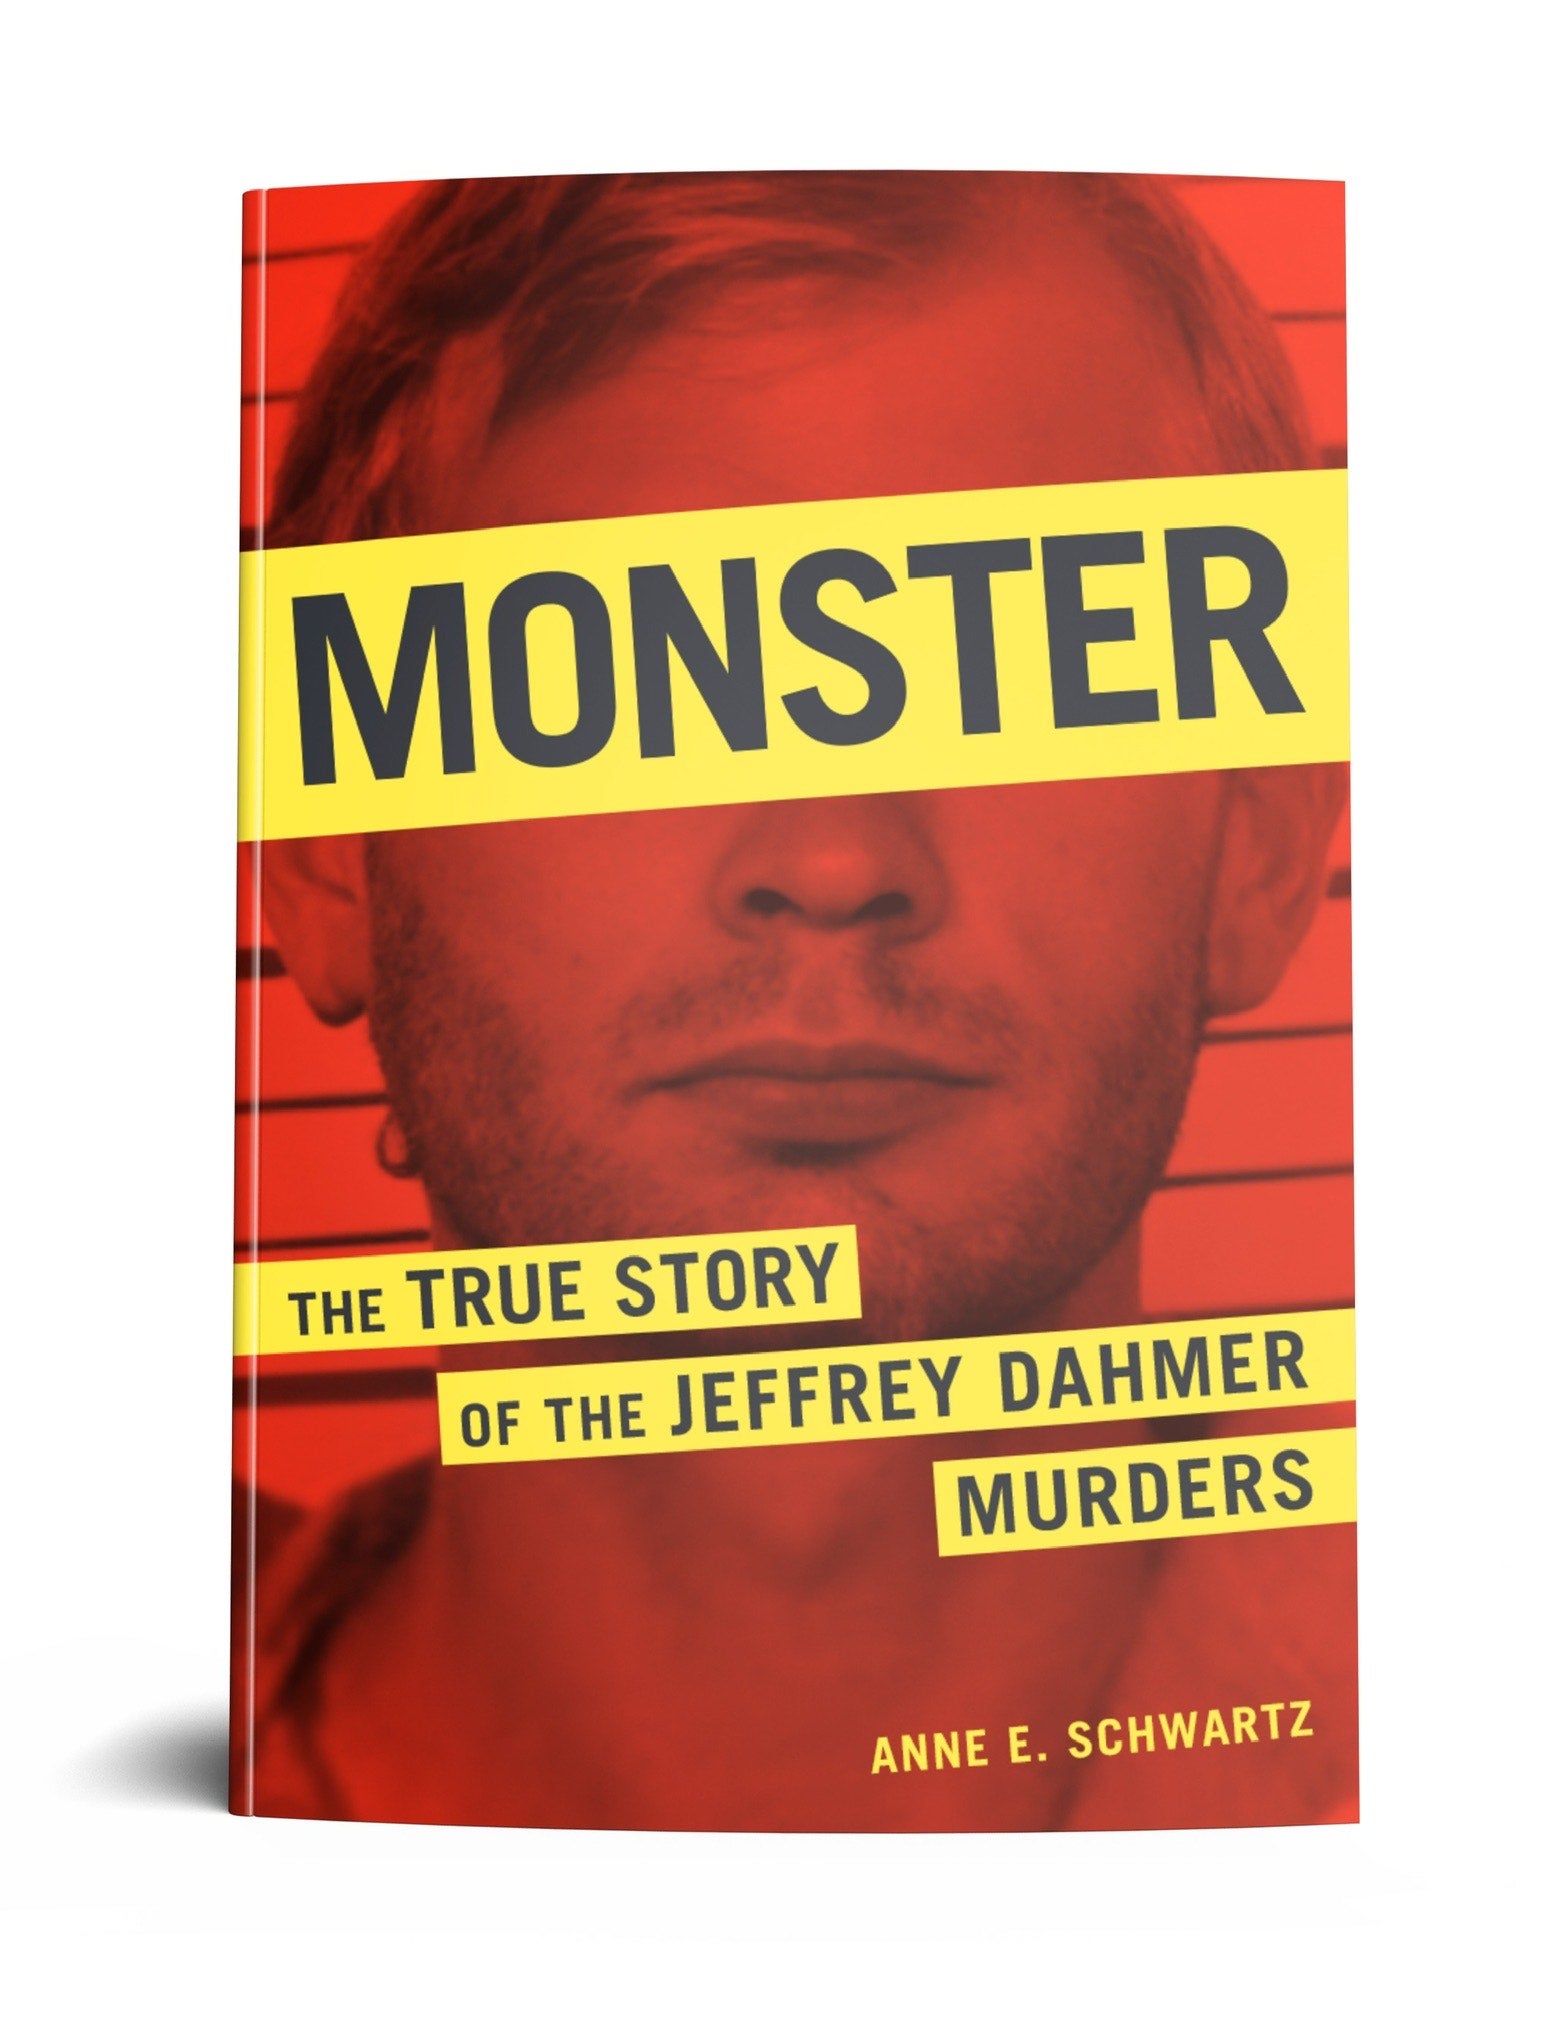 Monster: The True Story of Jeffrey Dahmer’s Murders is an updated version of Anne E. Schwartz’s 1991 bestselling book